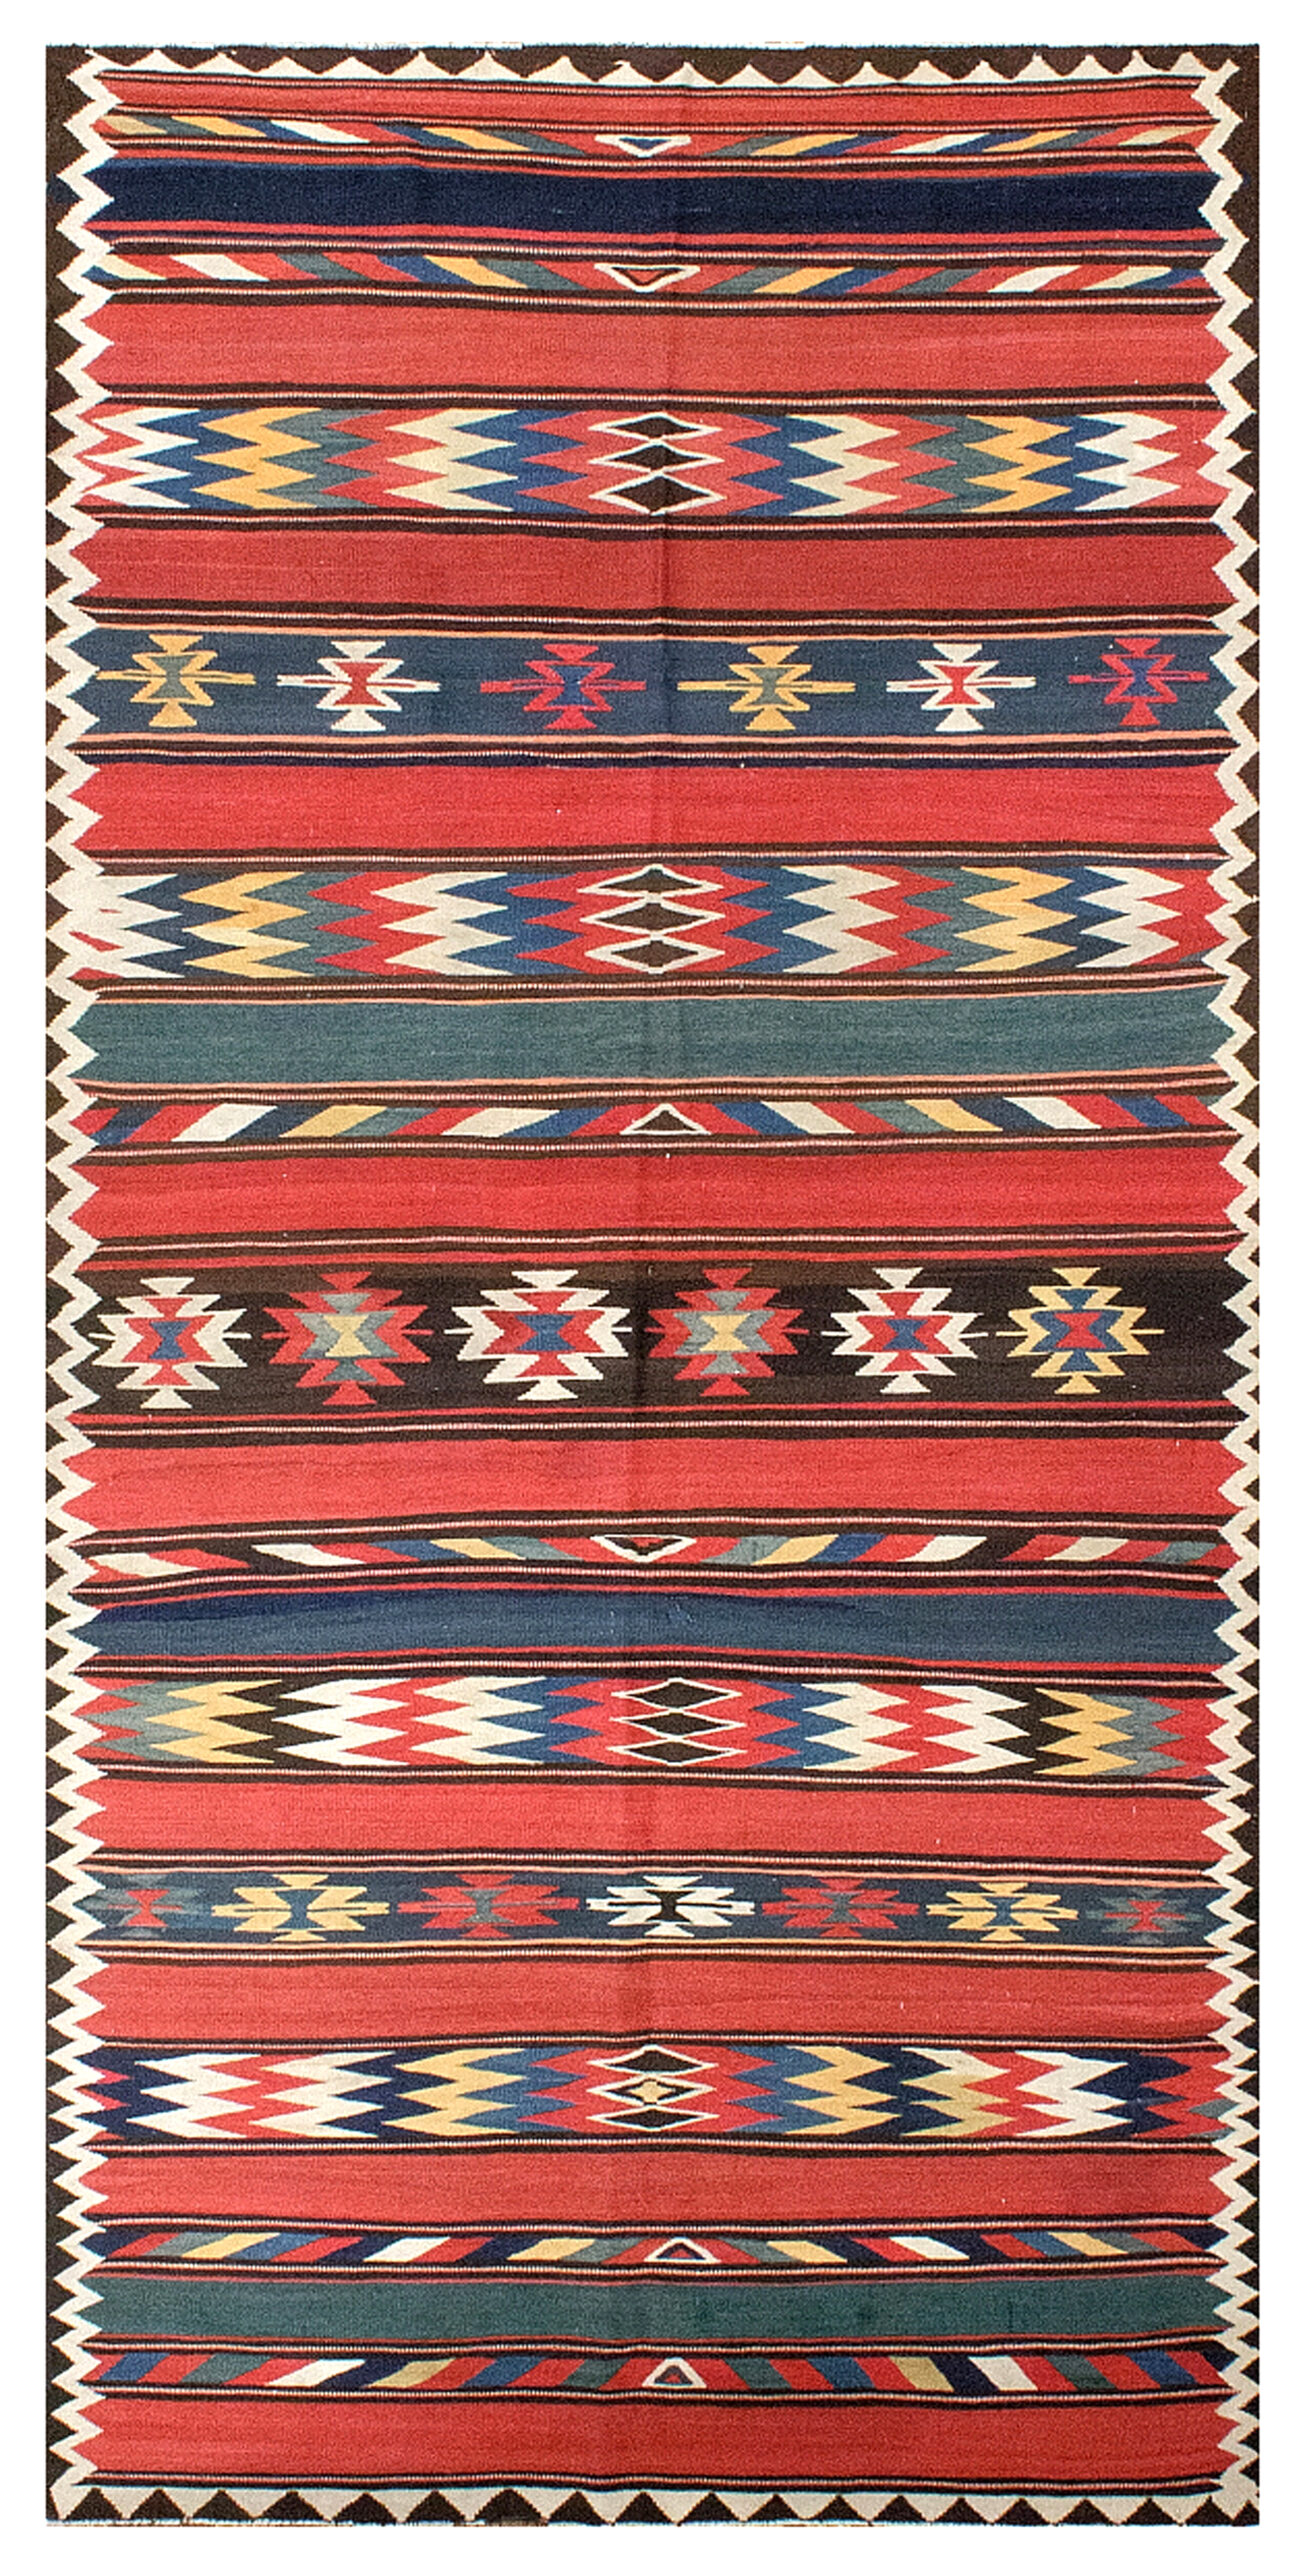 Antique Veramin kilim (flat woven carpet), north Persia - multi color bands of color with geometric decoration